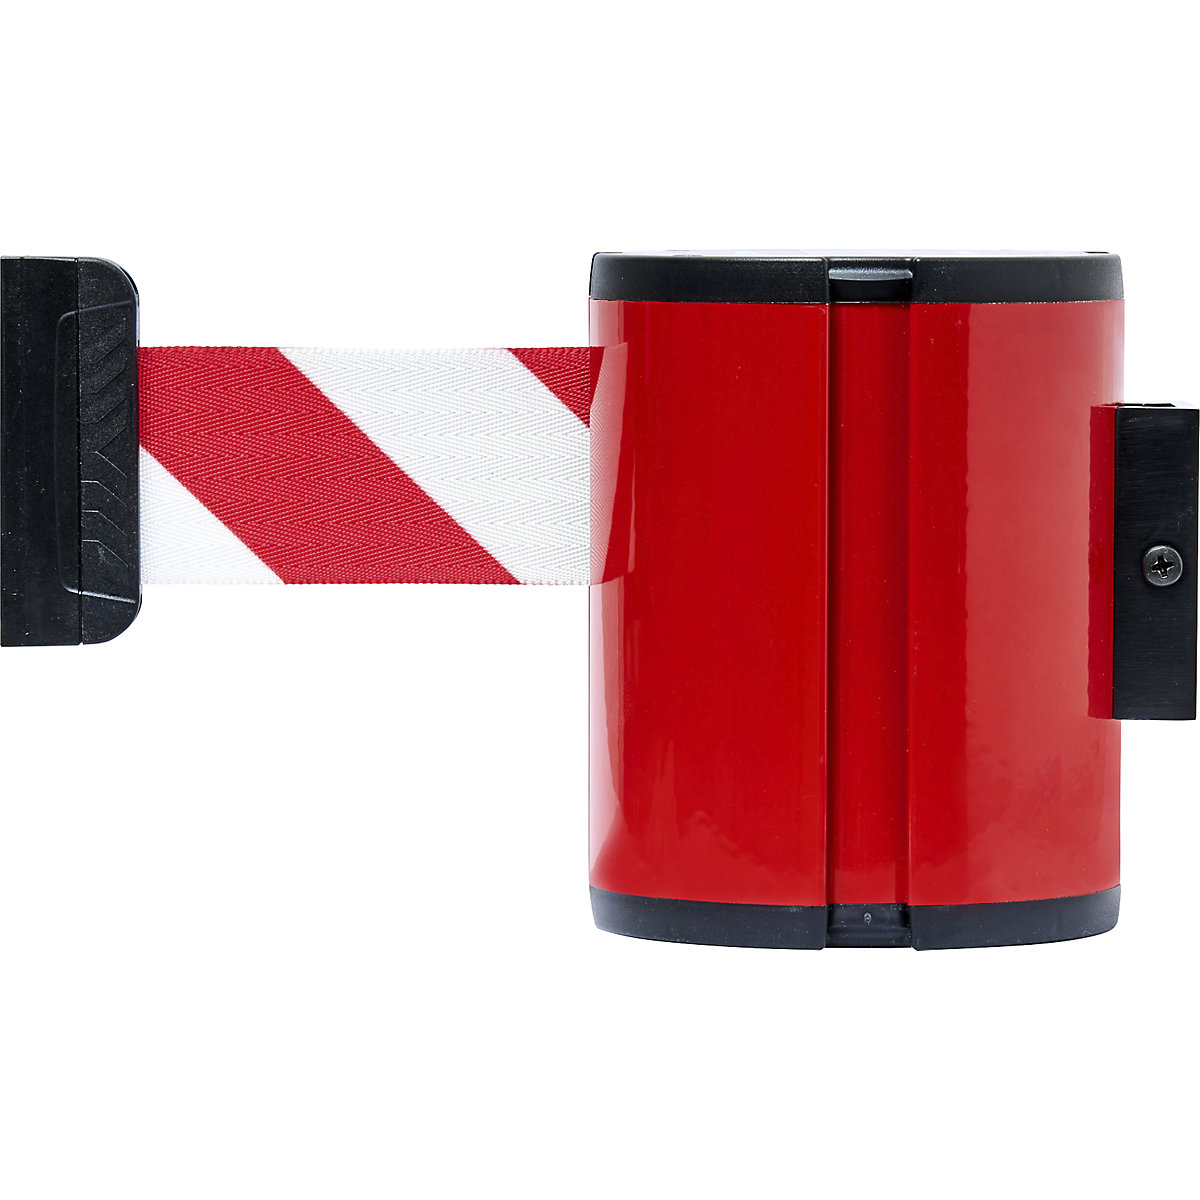 Gurtkassette aus Aluminium, Wall XXL, Gurtfarbe Rot/Weiß, Gehäusefarbe Rot